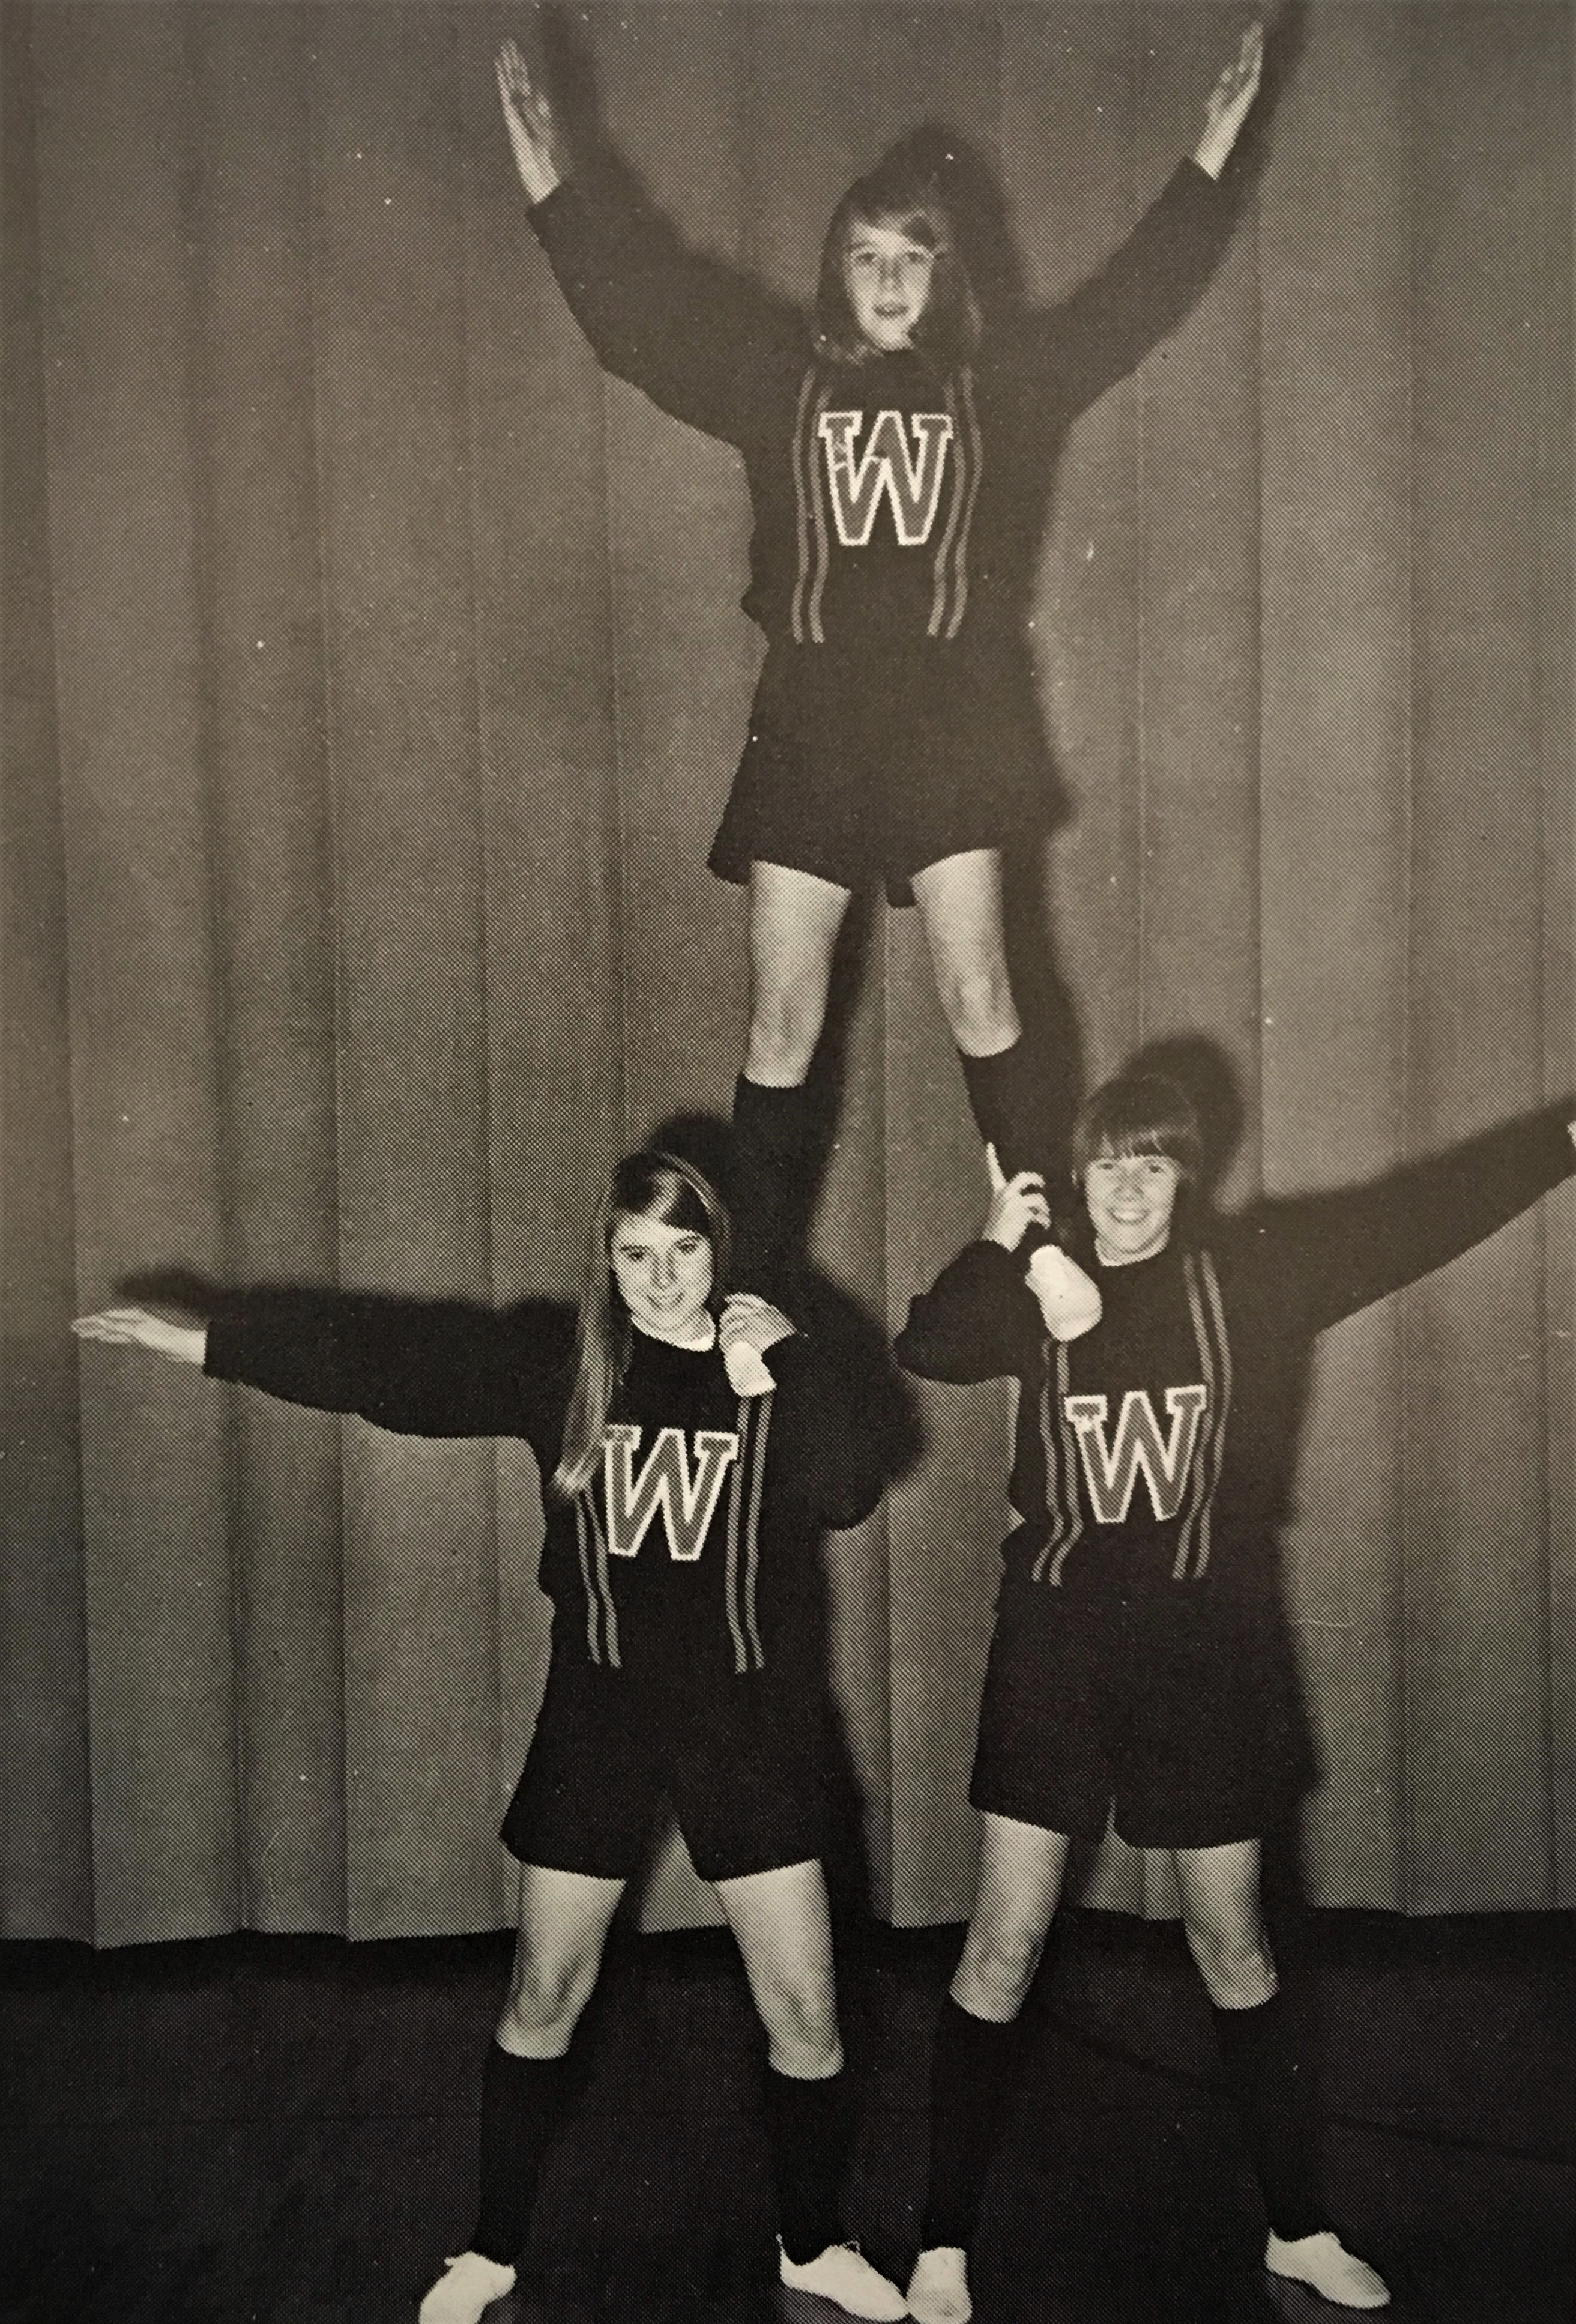 Cheerleaders (Left to Right): Jeanne Woychik, Barbara Bensand, Jane Windjue.